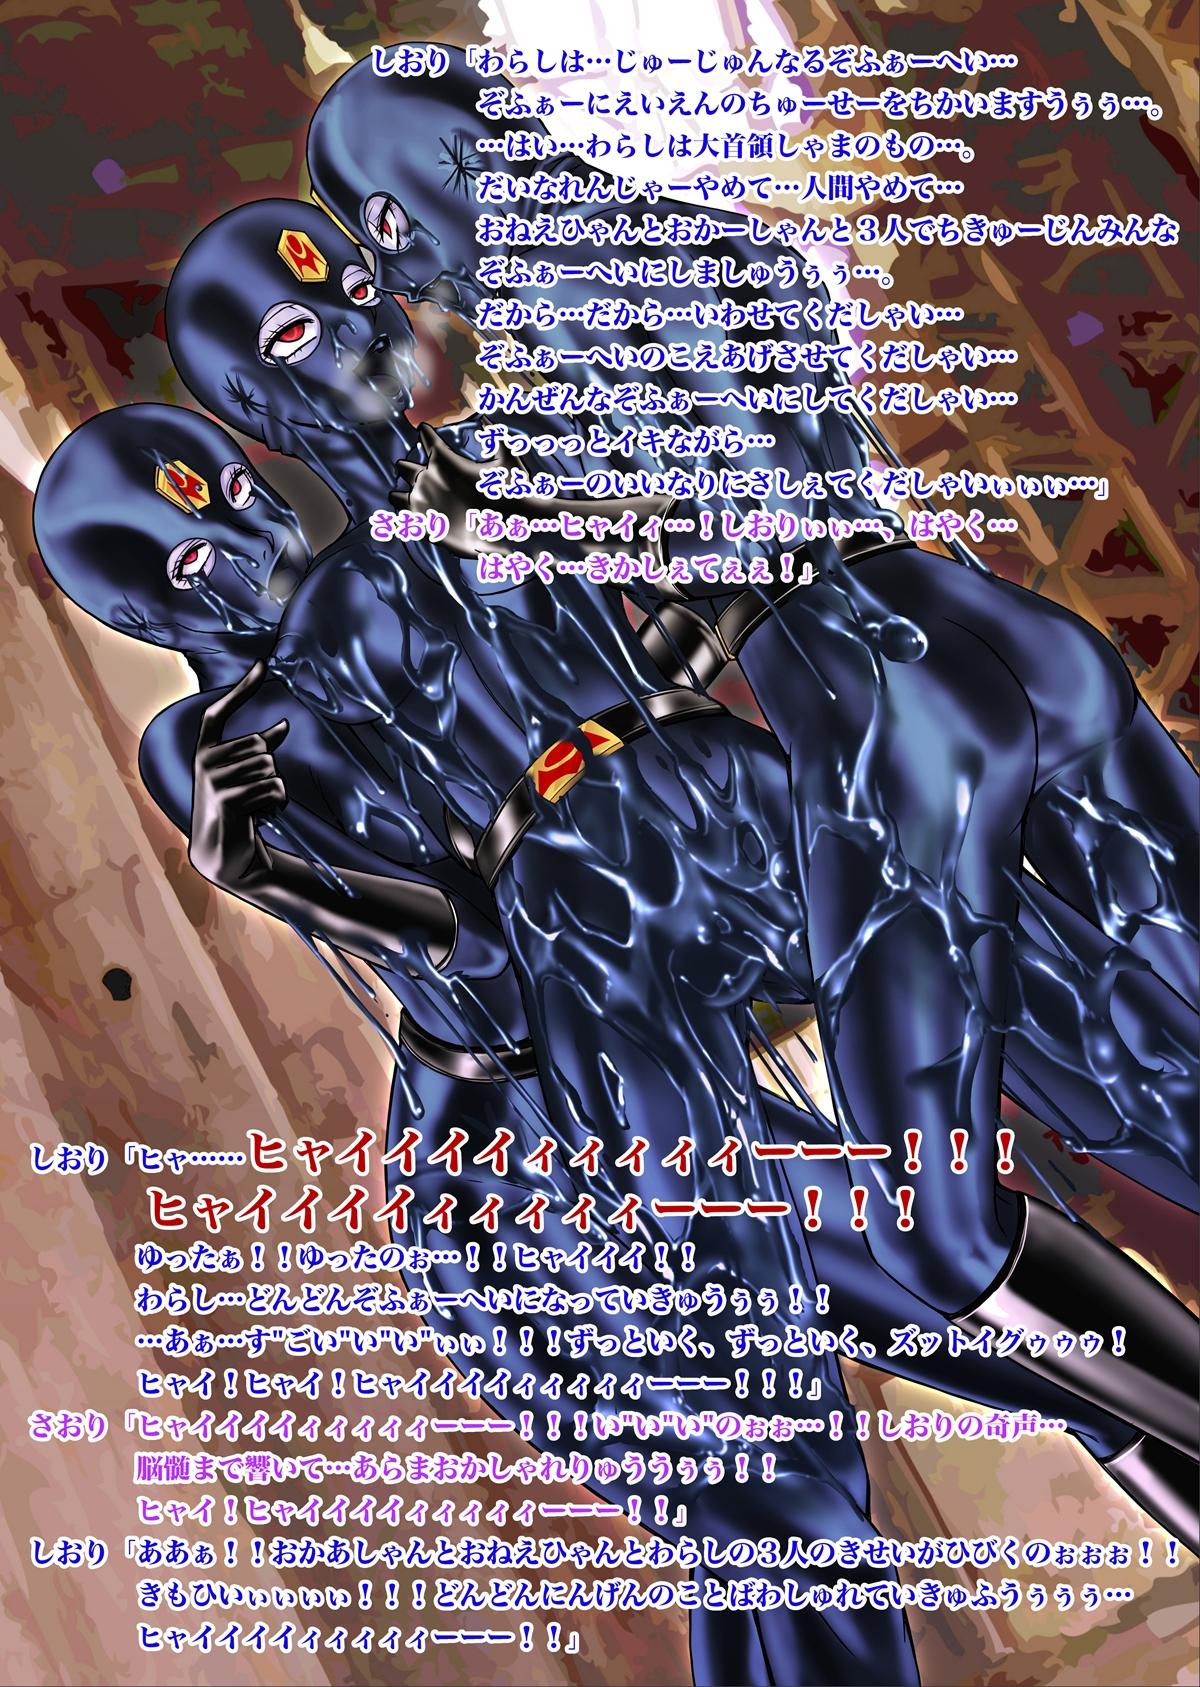 Tokubou Sentai Dina Ranger "Vol.2 Special Edition" 44